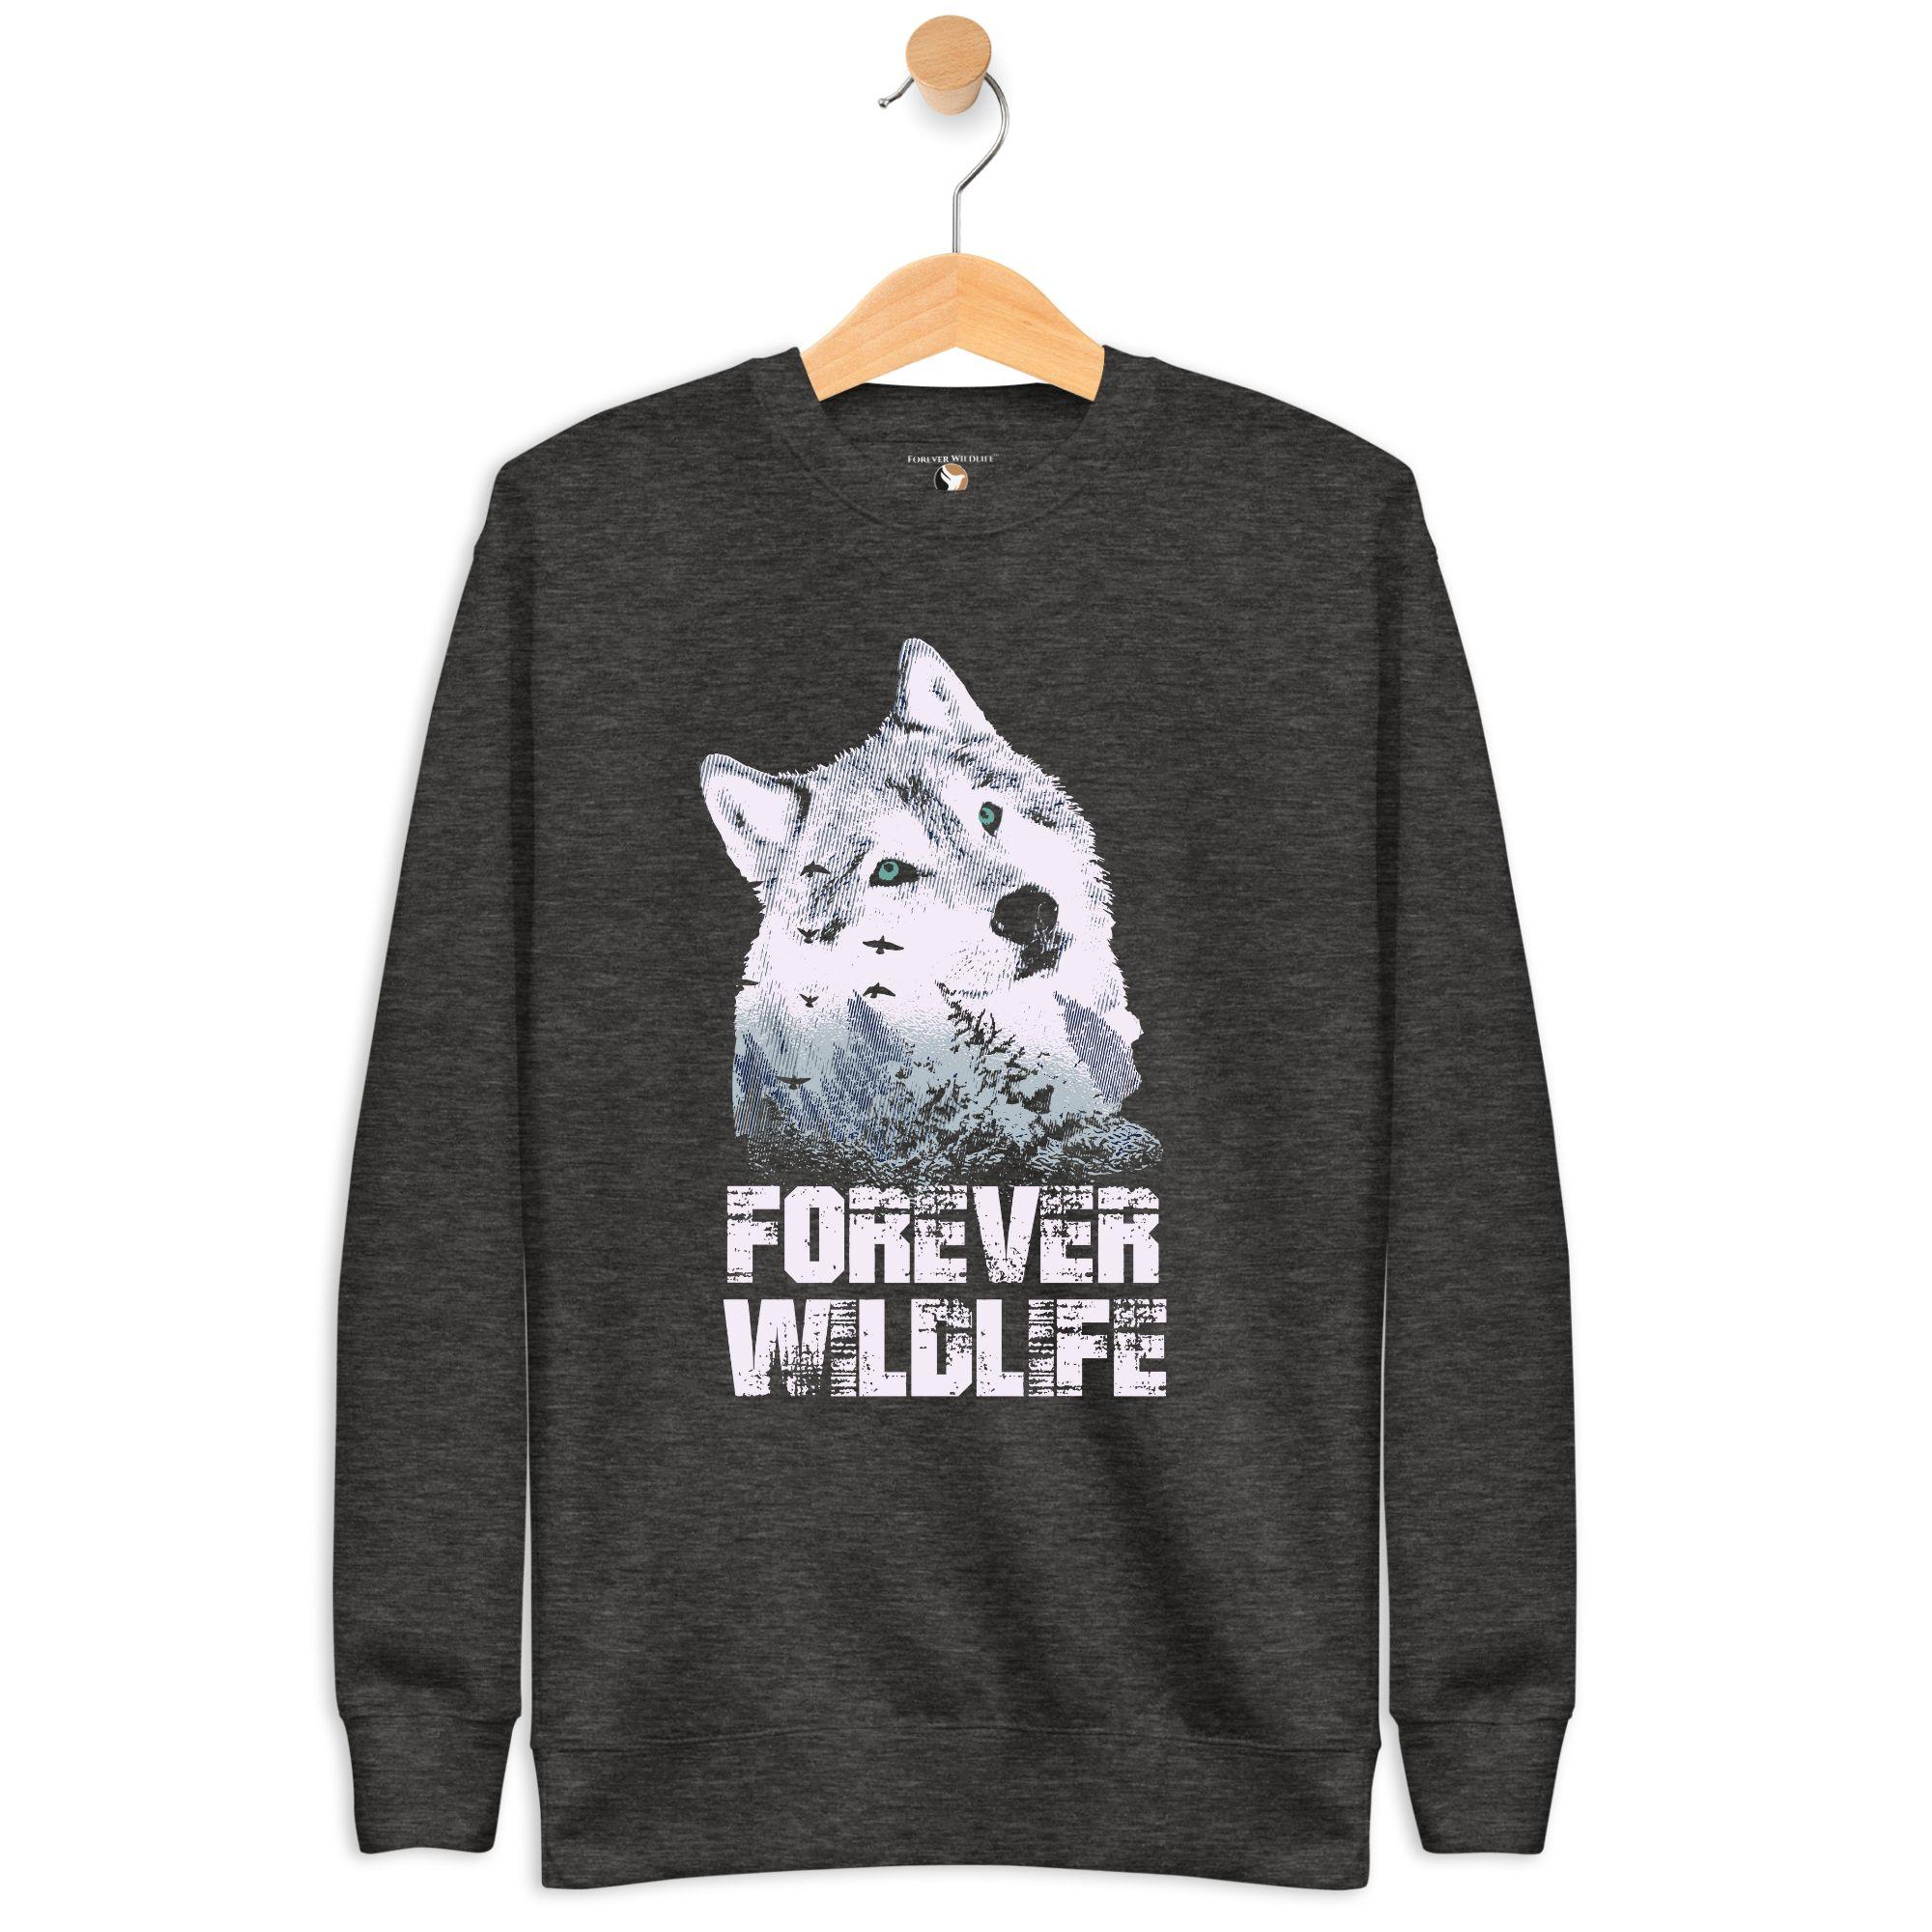 Wolf Sweatshirt in Charcoal-Premium Wildlife Animal Inspiration Sweatshirt Design, part of Wildlife Sweatshirts & Clothing from Forever Wildlife.